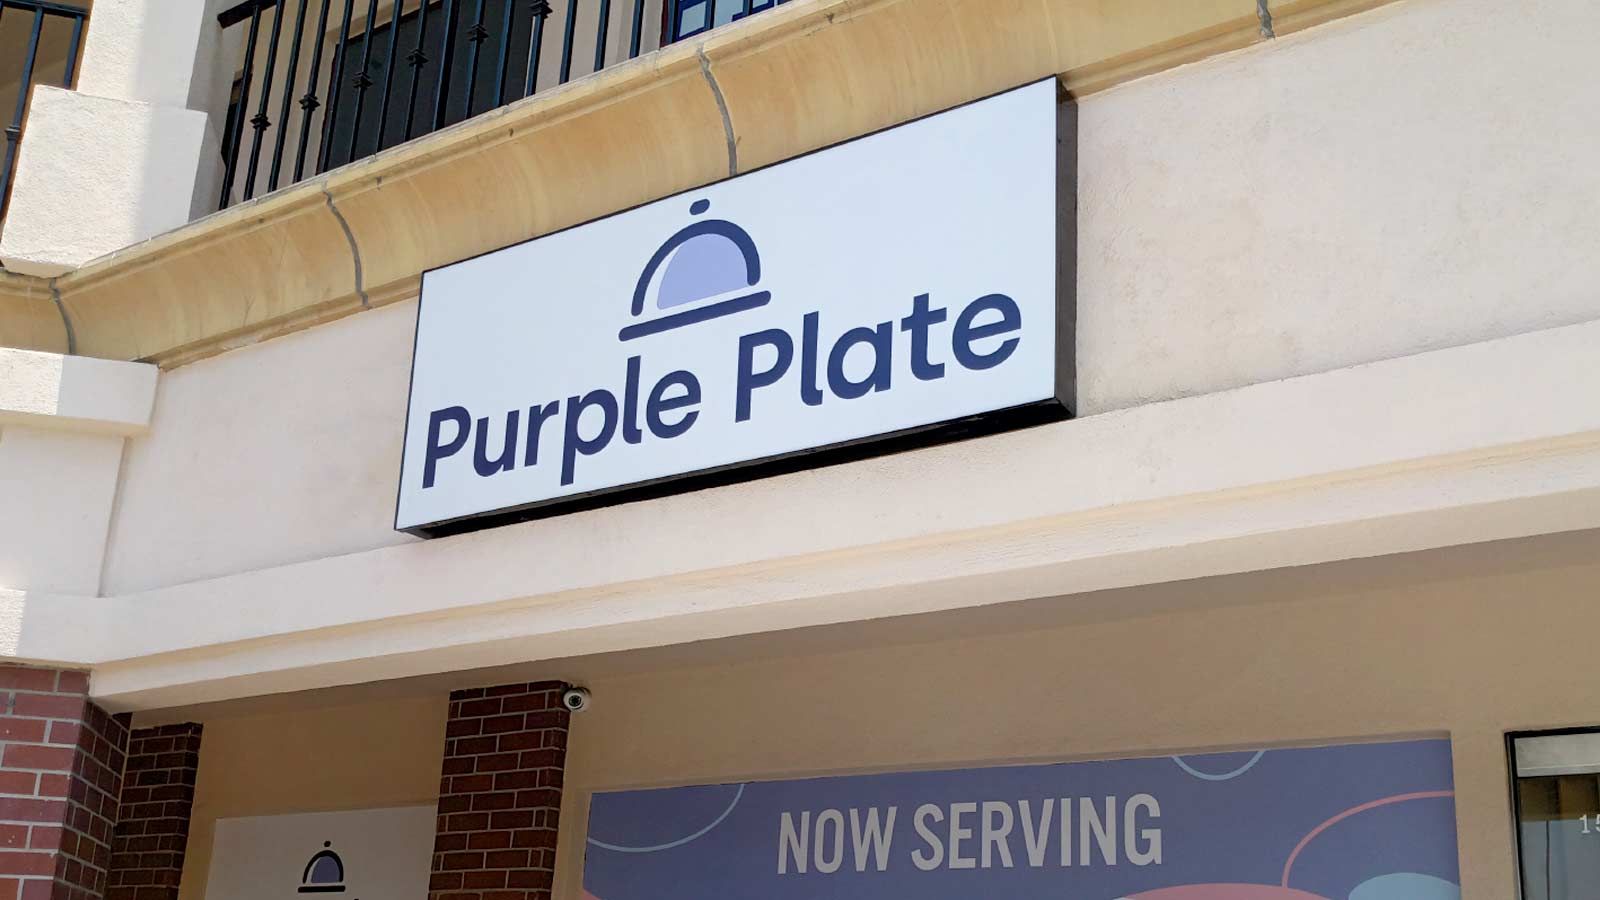 purple plate outdoor illuminated box sign